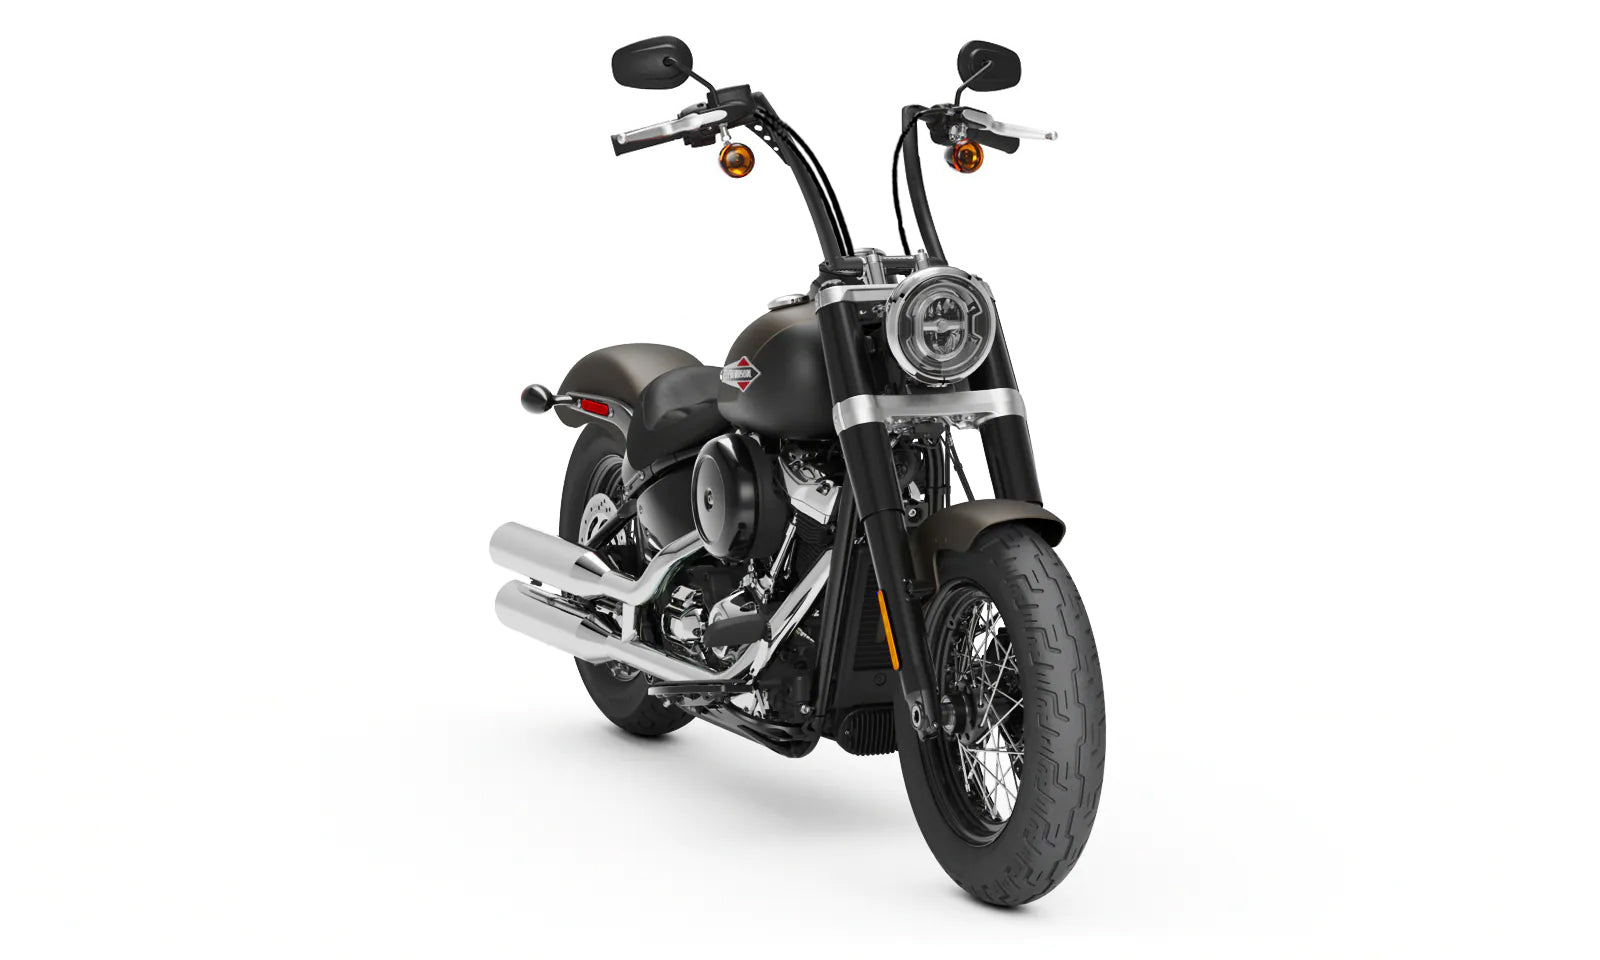 Viking Iron Born 12" Handlebar for Harley Softail Slim FLS Matte Black Bag on Bike View @expand